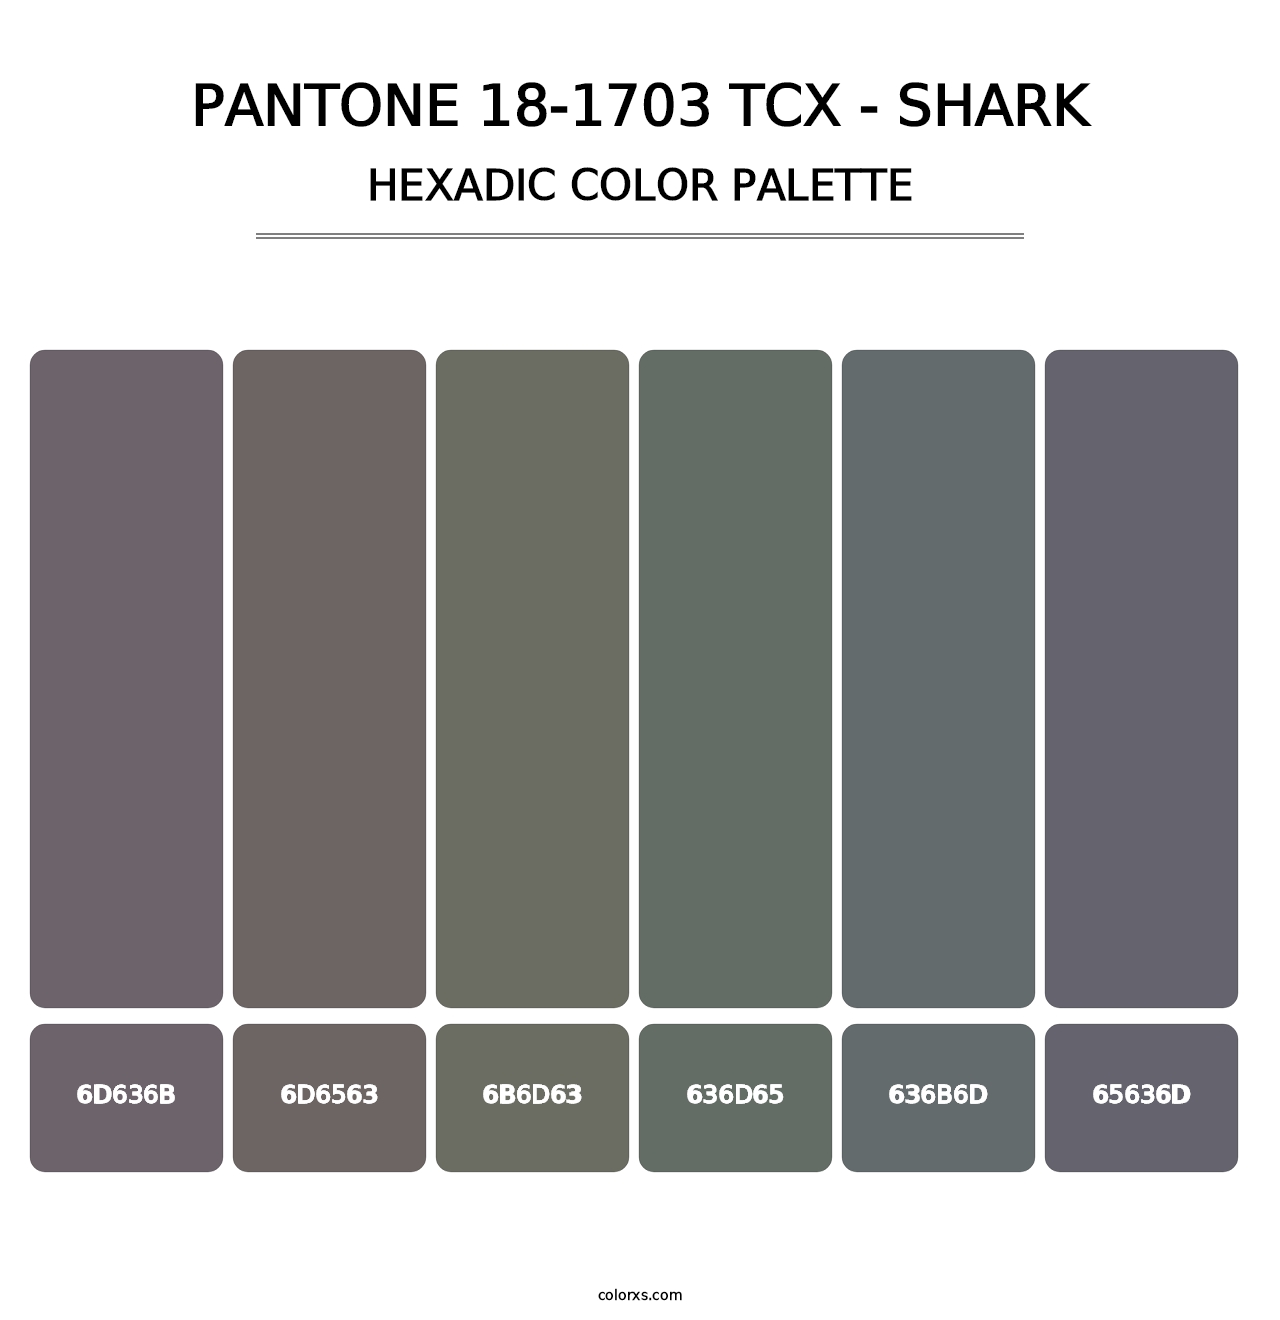 PANTONE 18-1703 TCX - Shark - Hexadic Color Palette